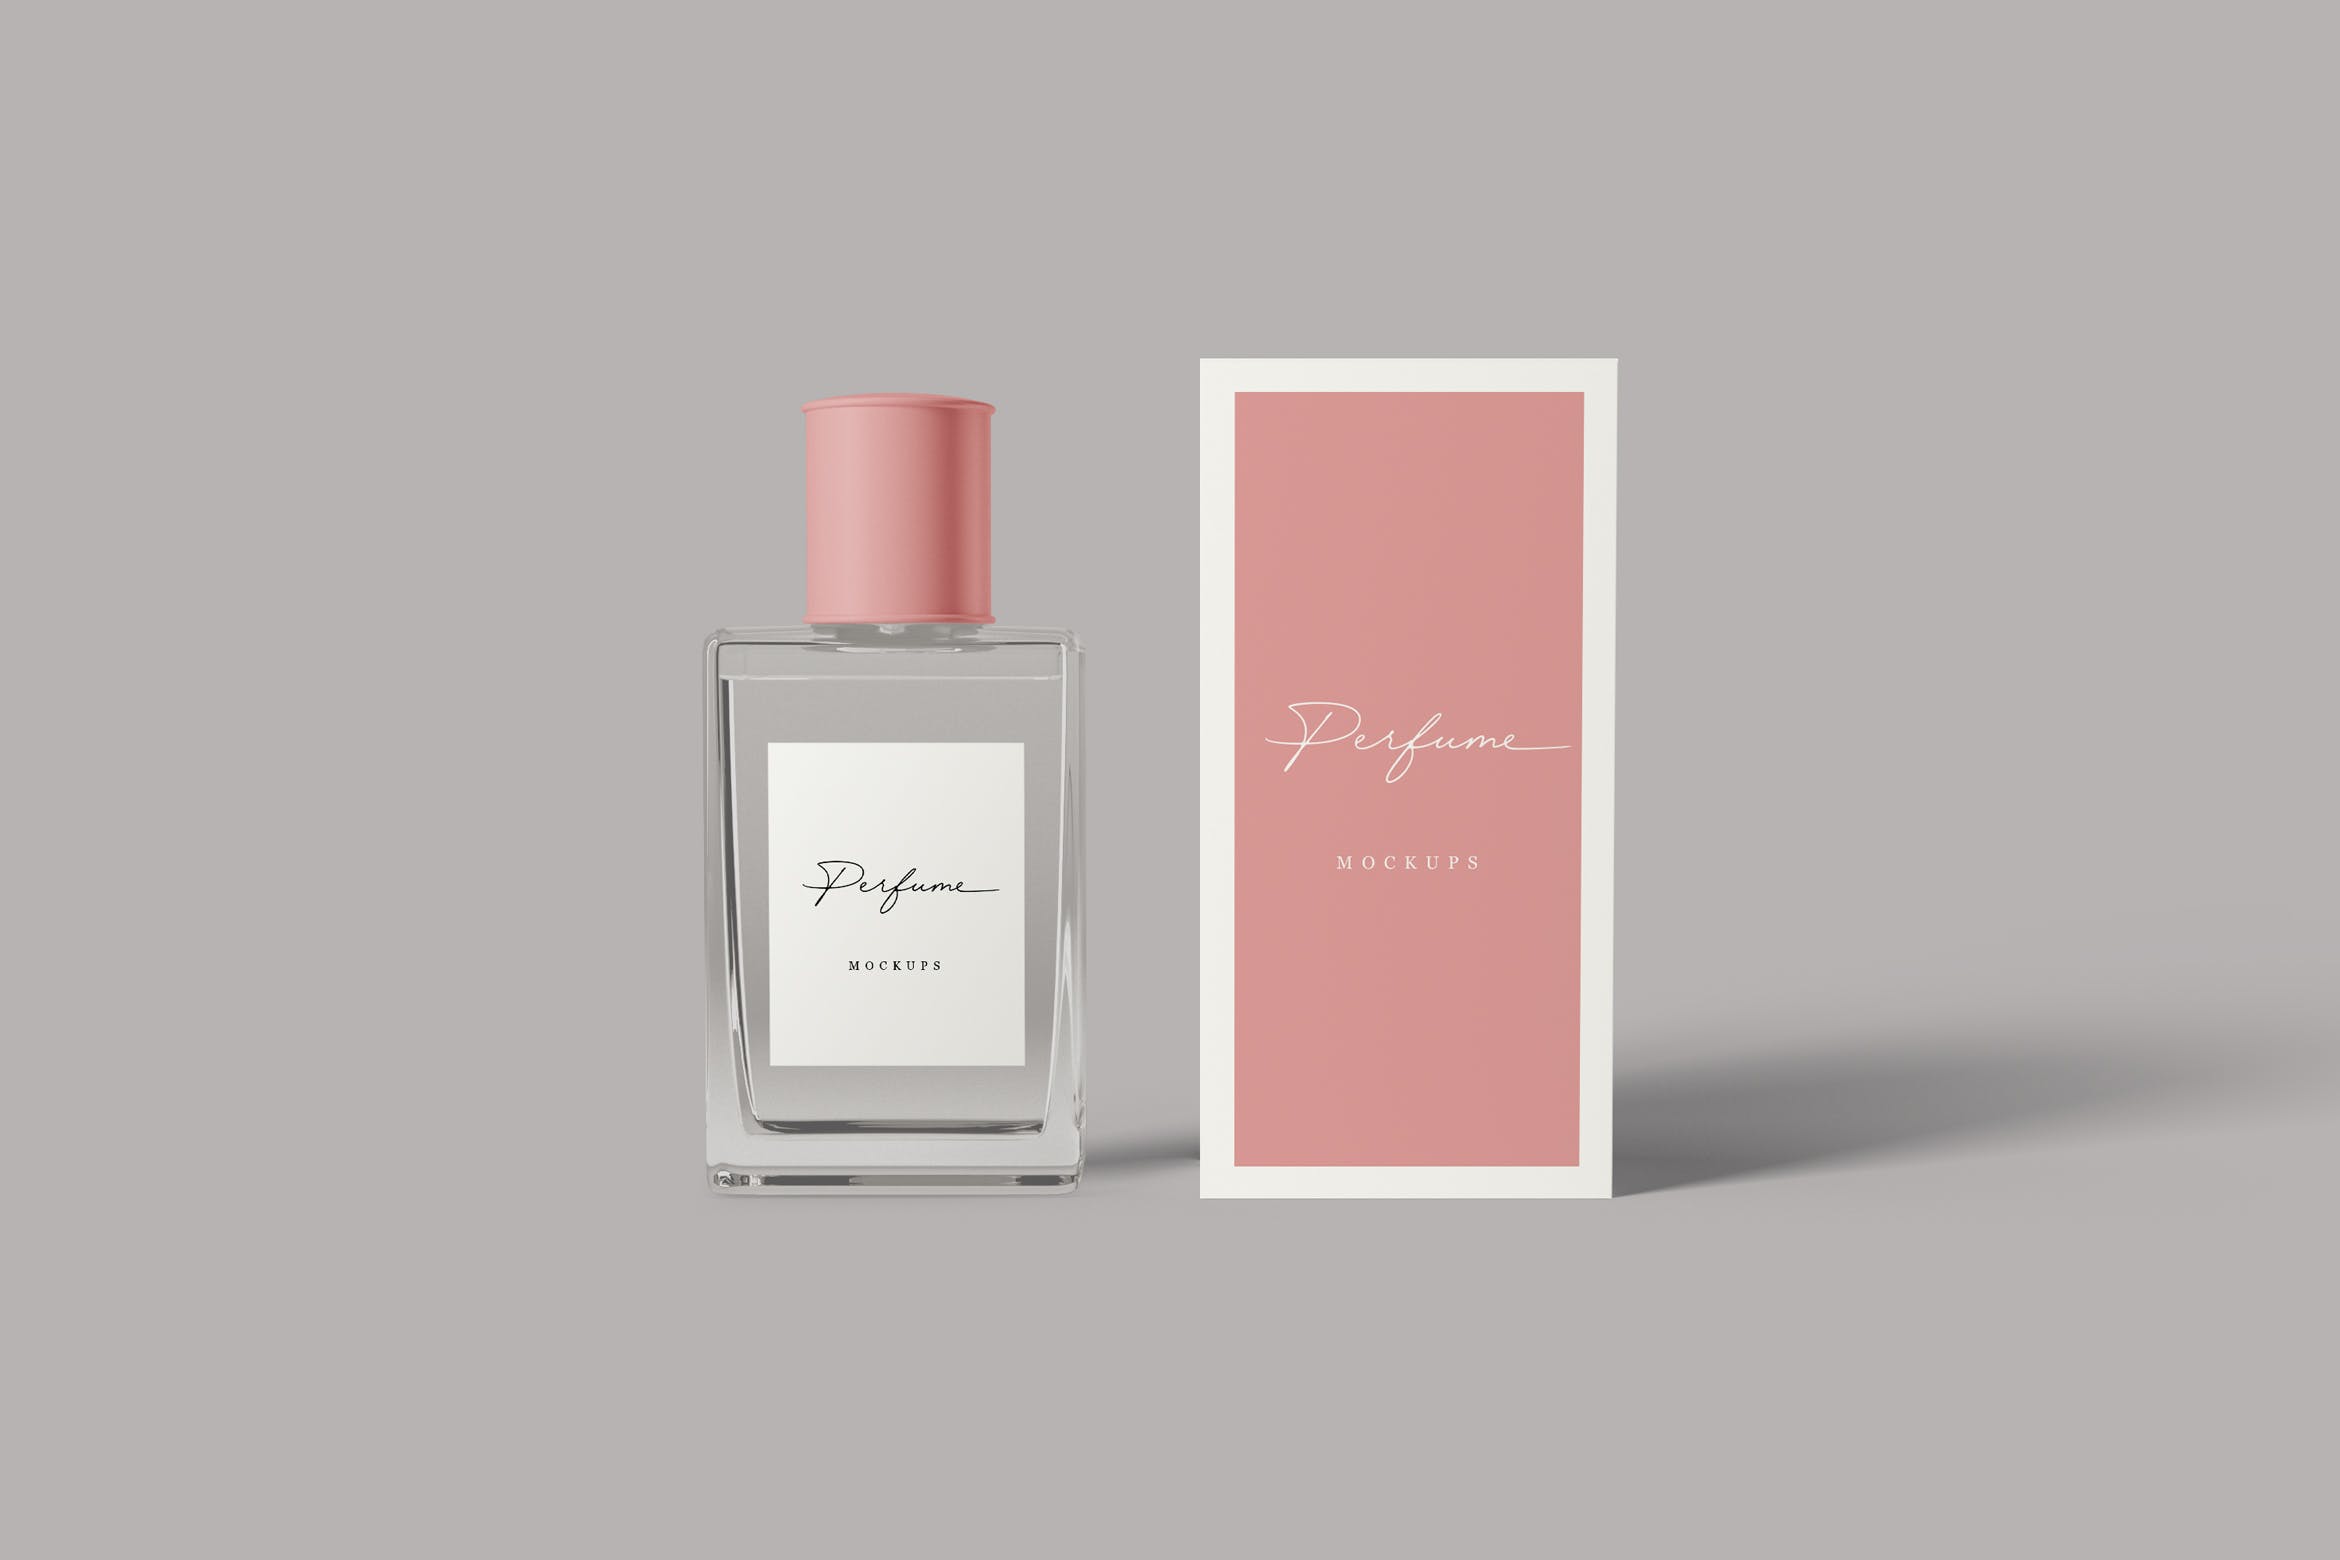 香水瓶外观设计图素材库精选 Perfume Mockups插图